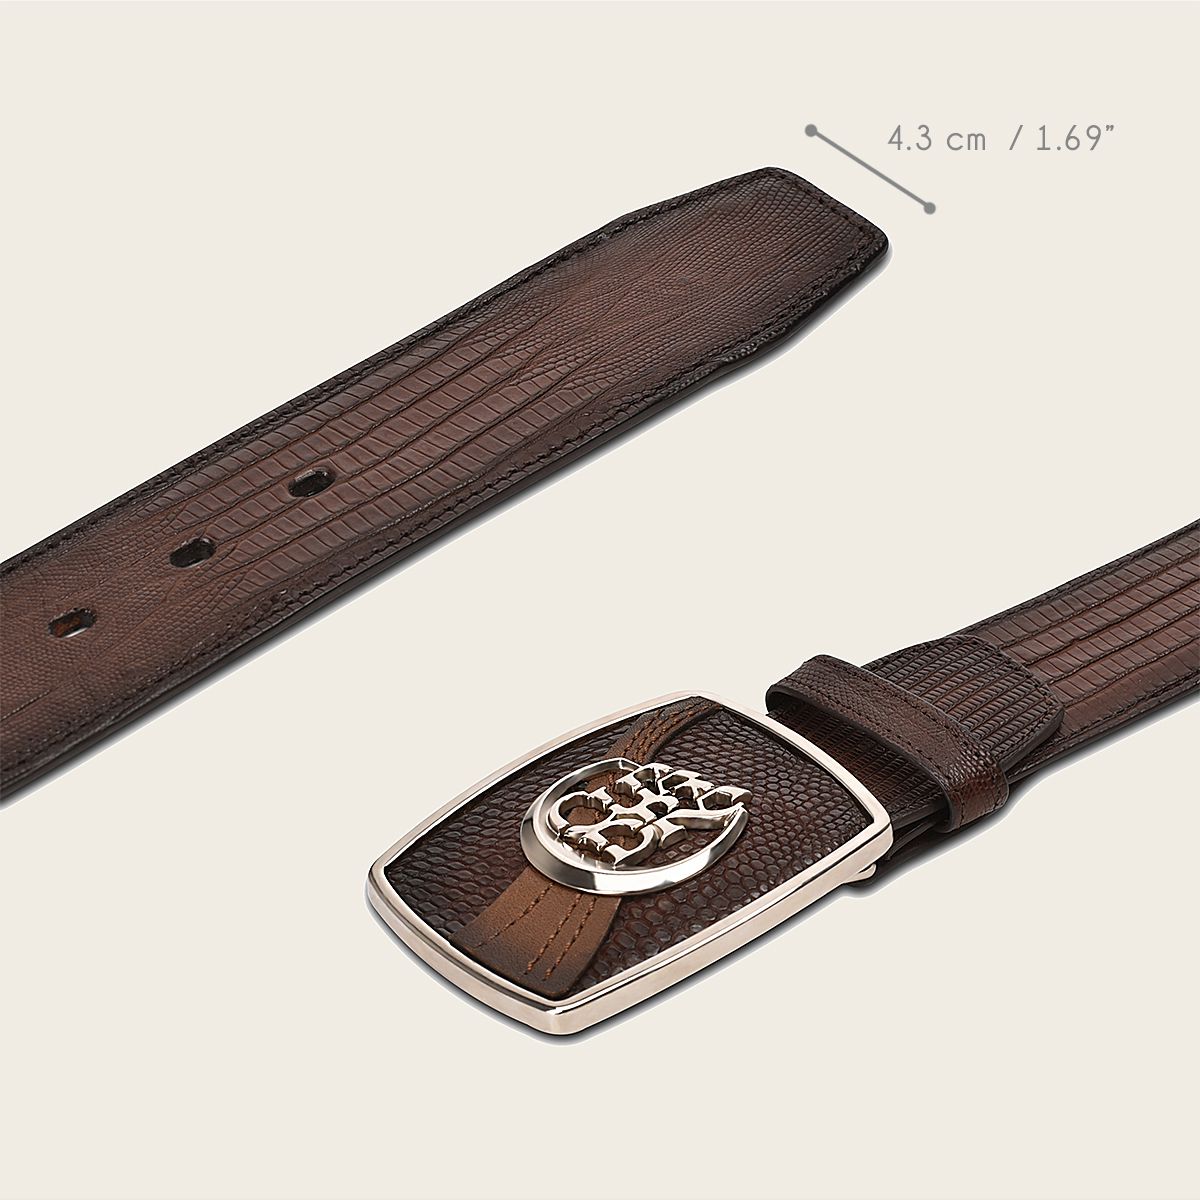 CV499LT - Cuadra brown western fashion lizard belt for men-Kuet.us